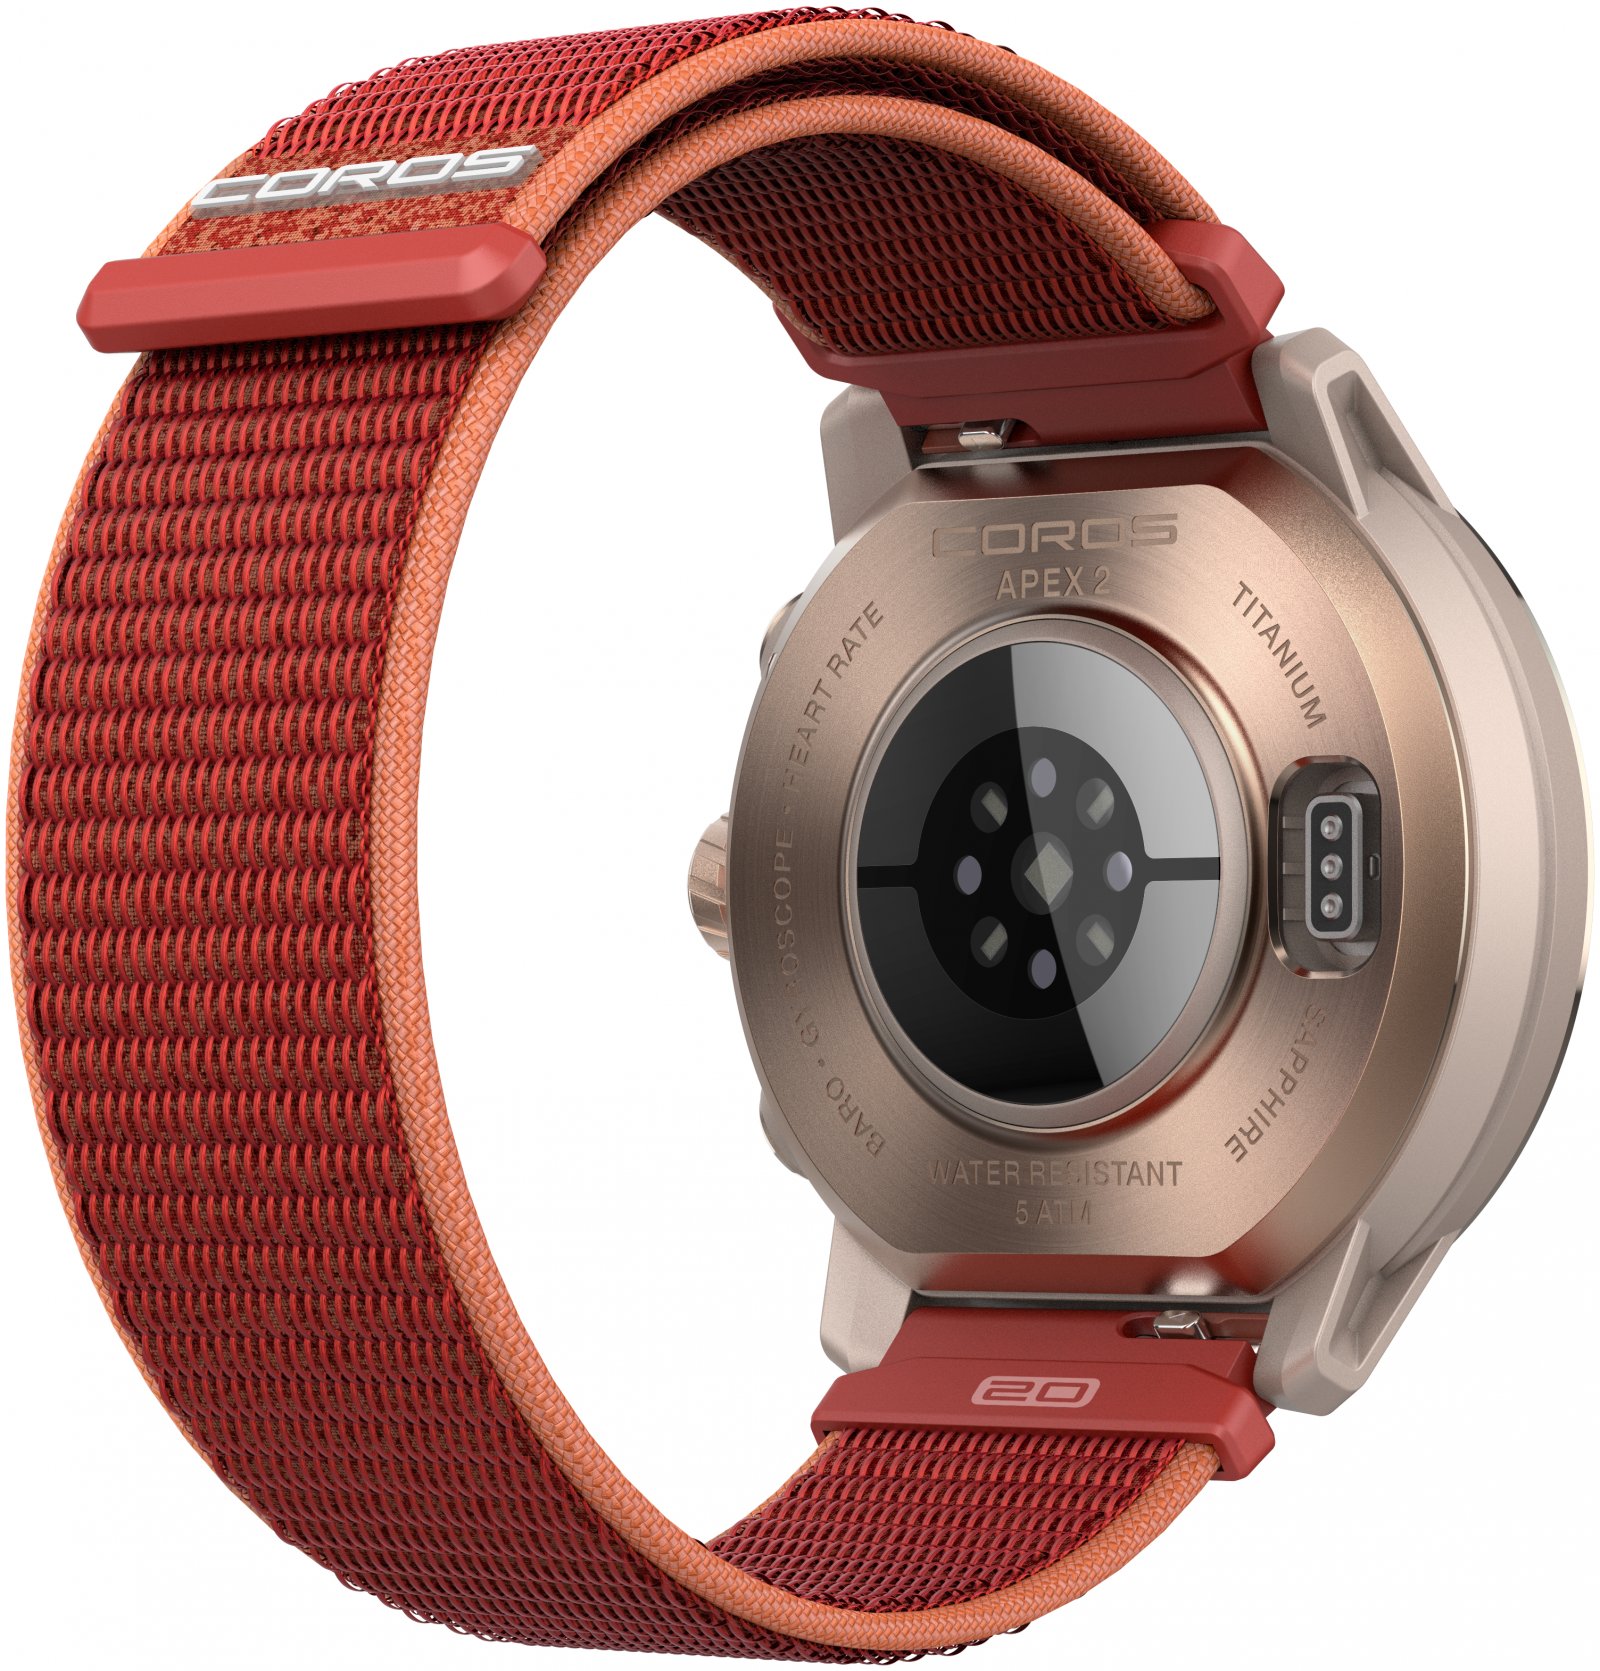 Coros APEX 2 watch review